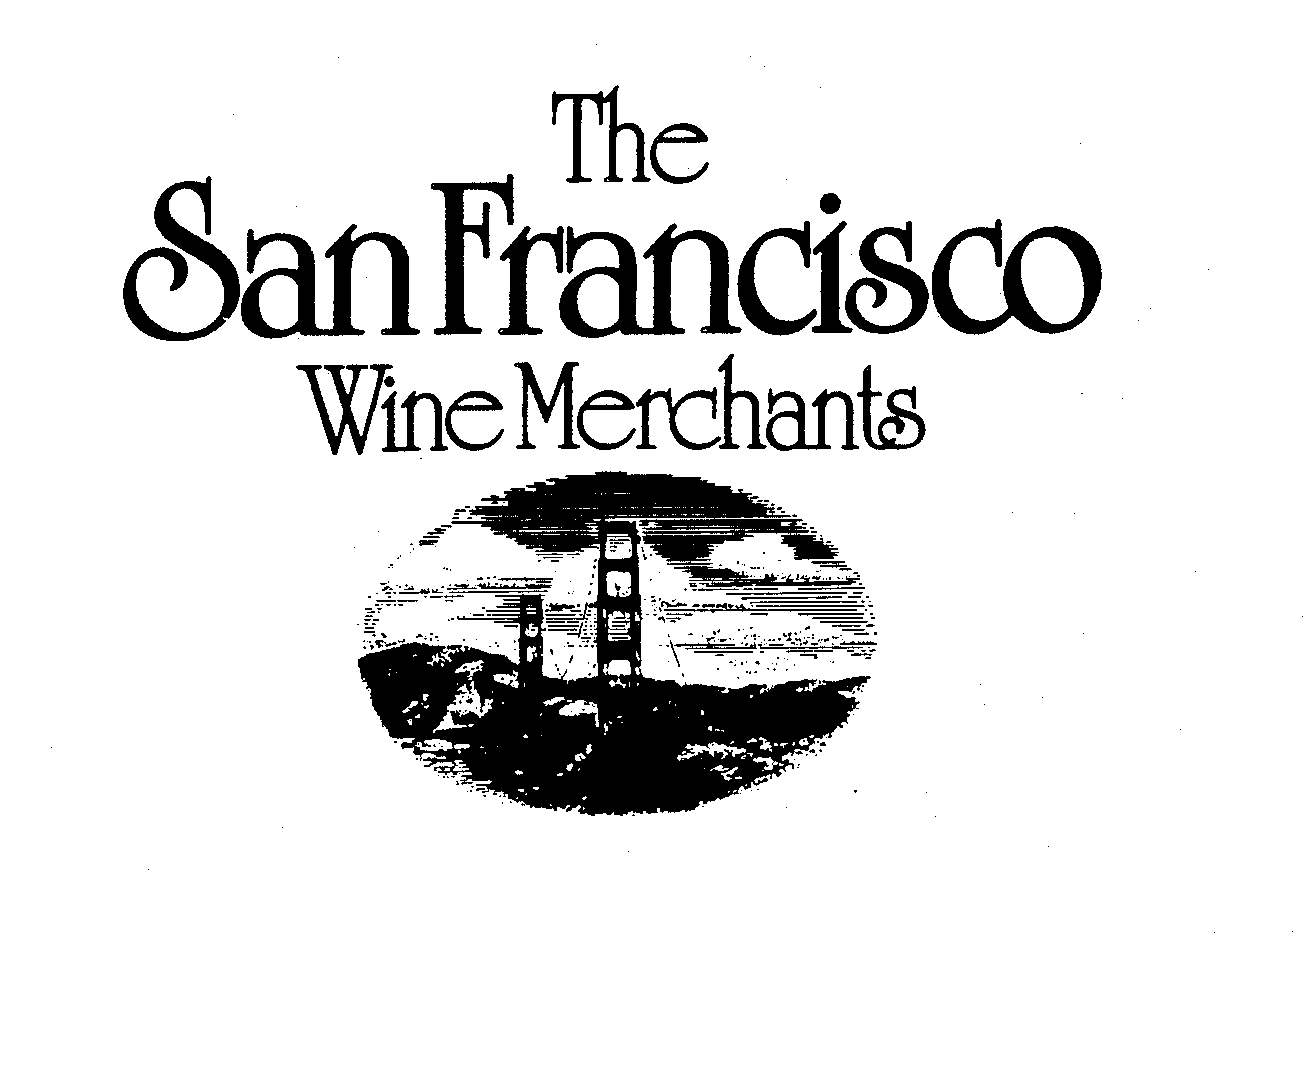  THE SAN FRANCISCO WINE MERCHANTS